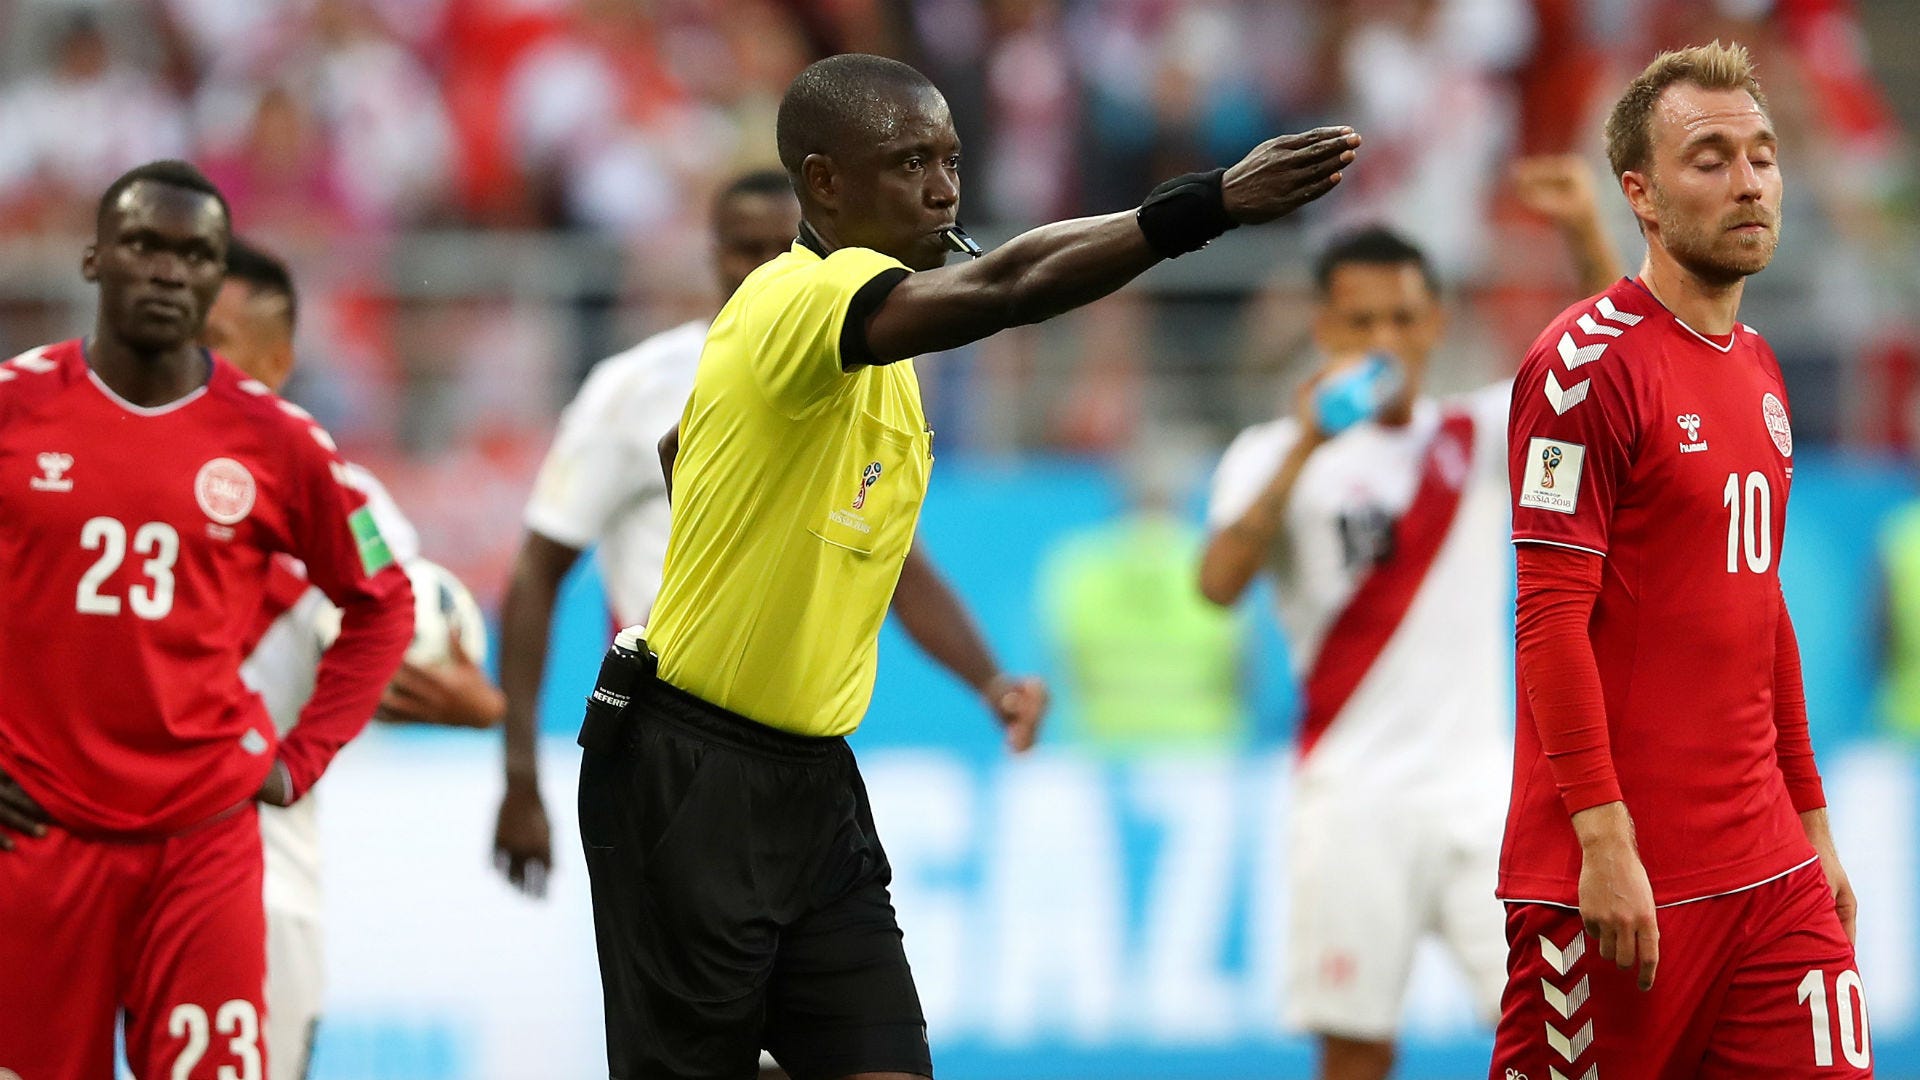 Referee Bakary Bassama Peru Denmark World Cup 2018